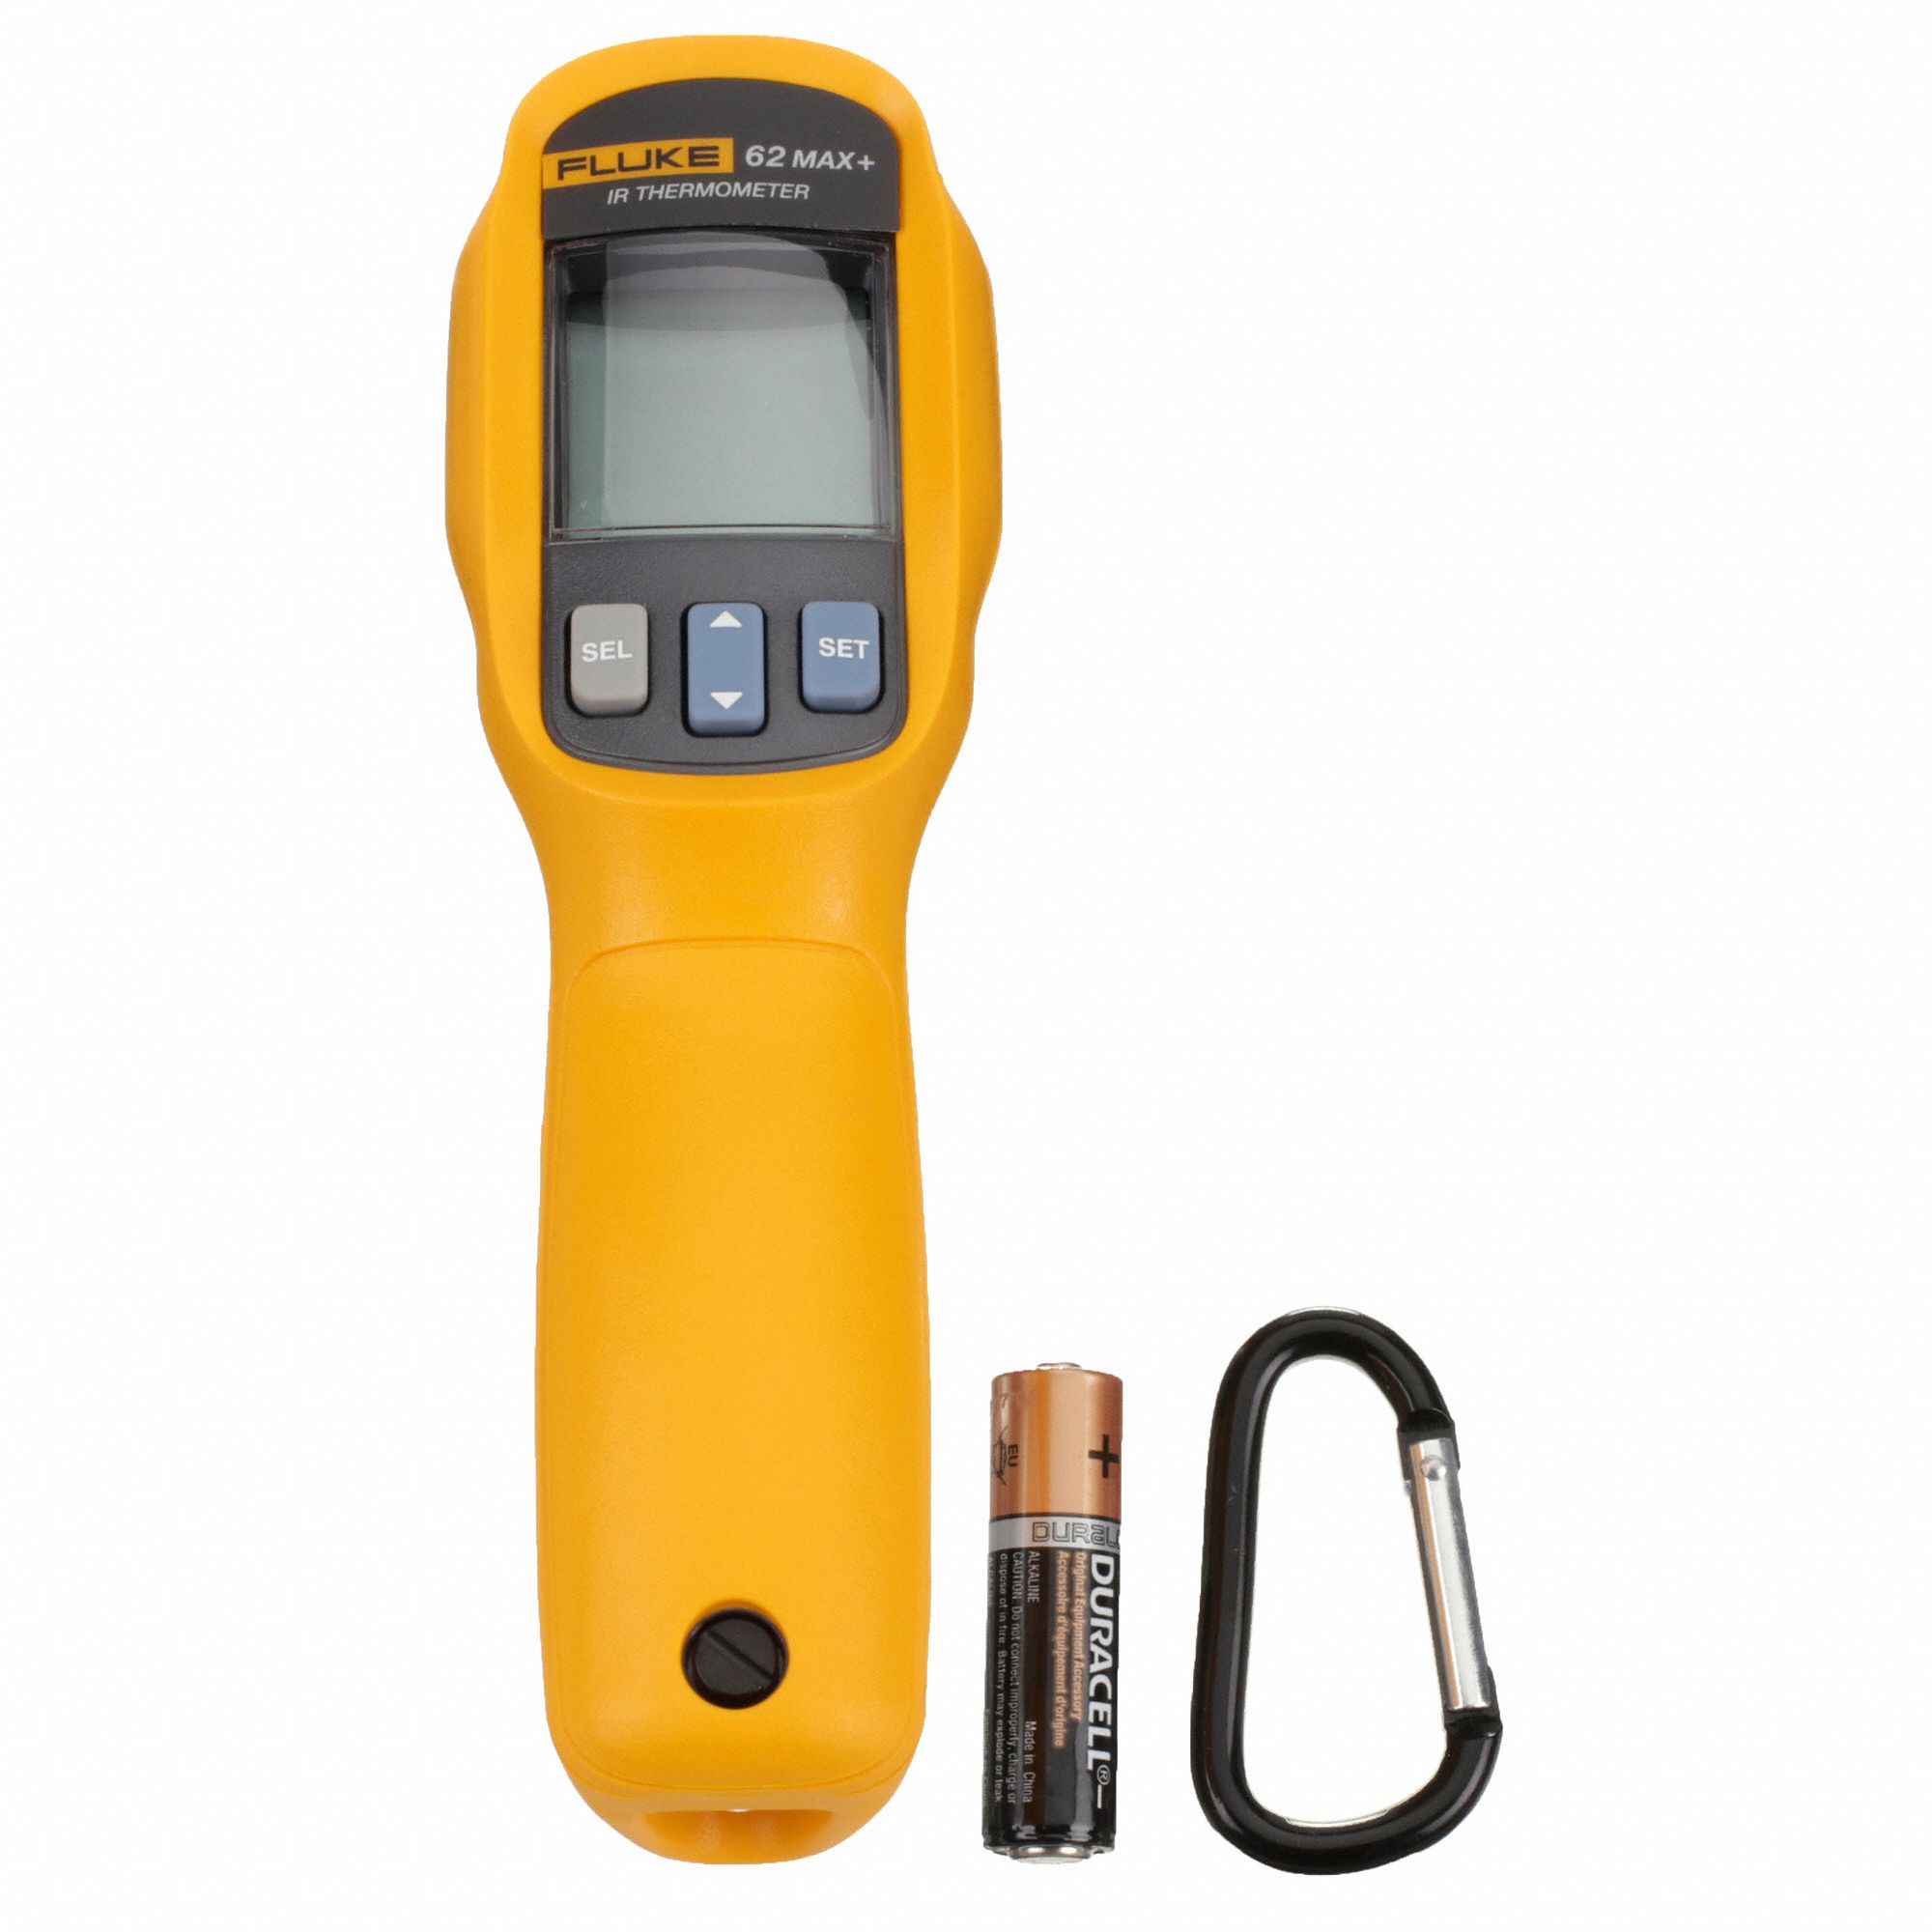 Thermomètre portable, Thermomètre IR laser Fluke 62MAX+